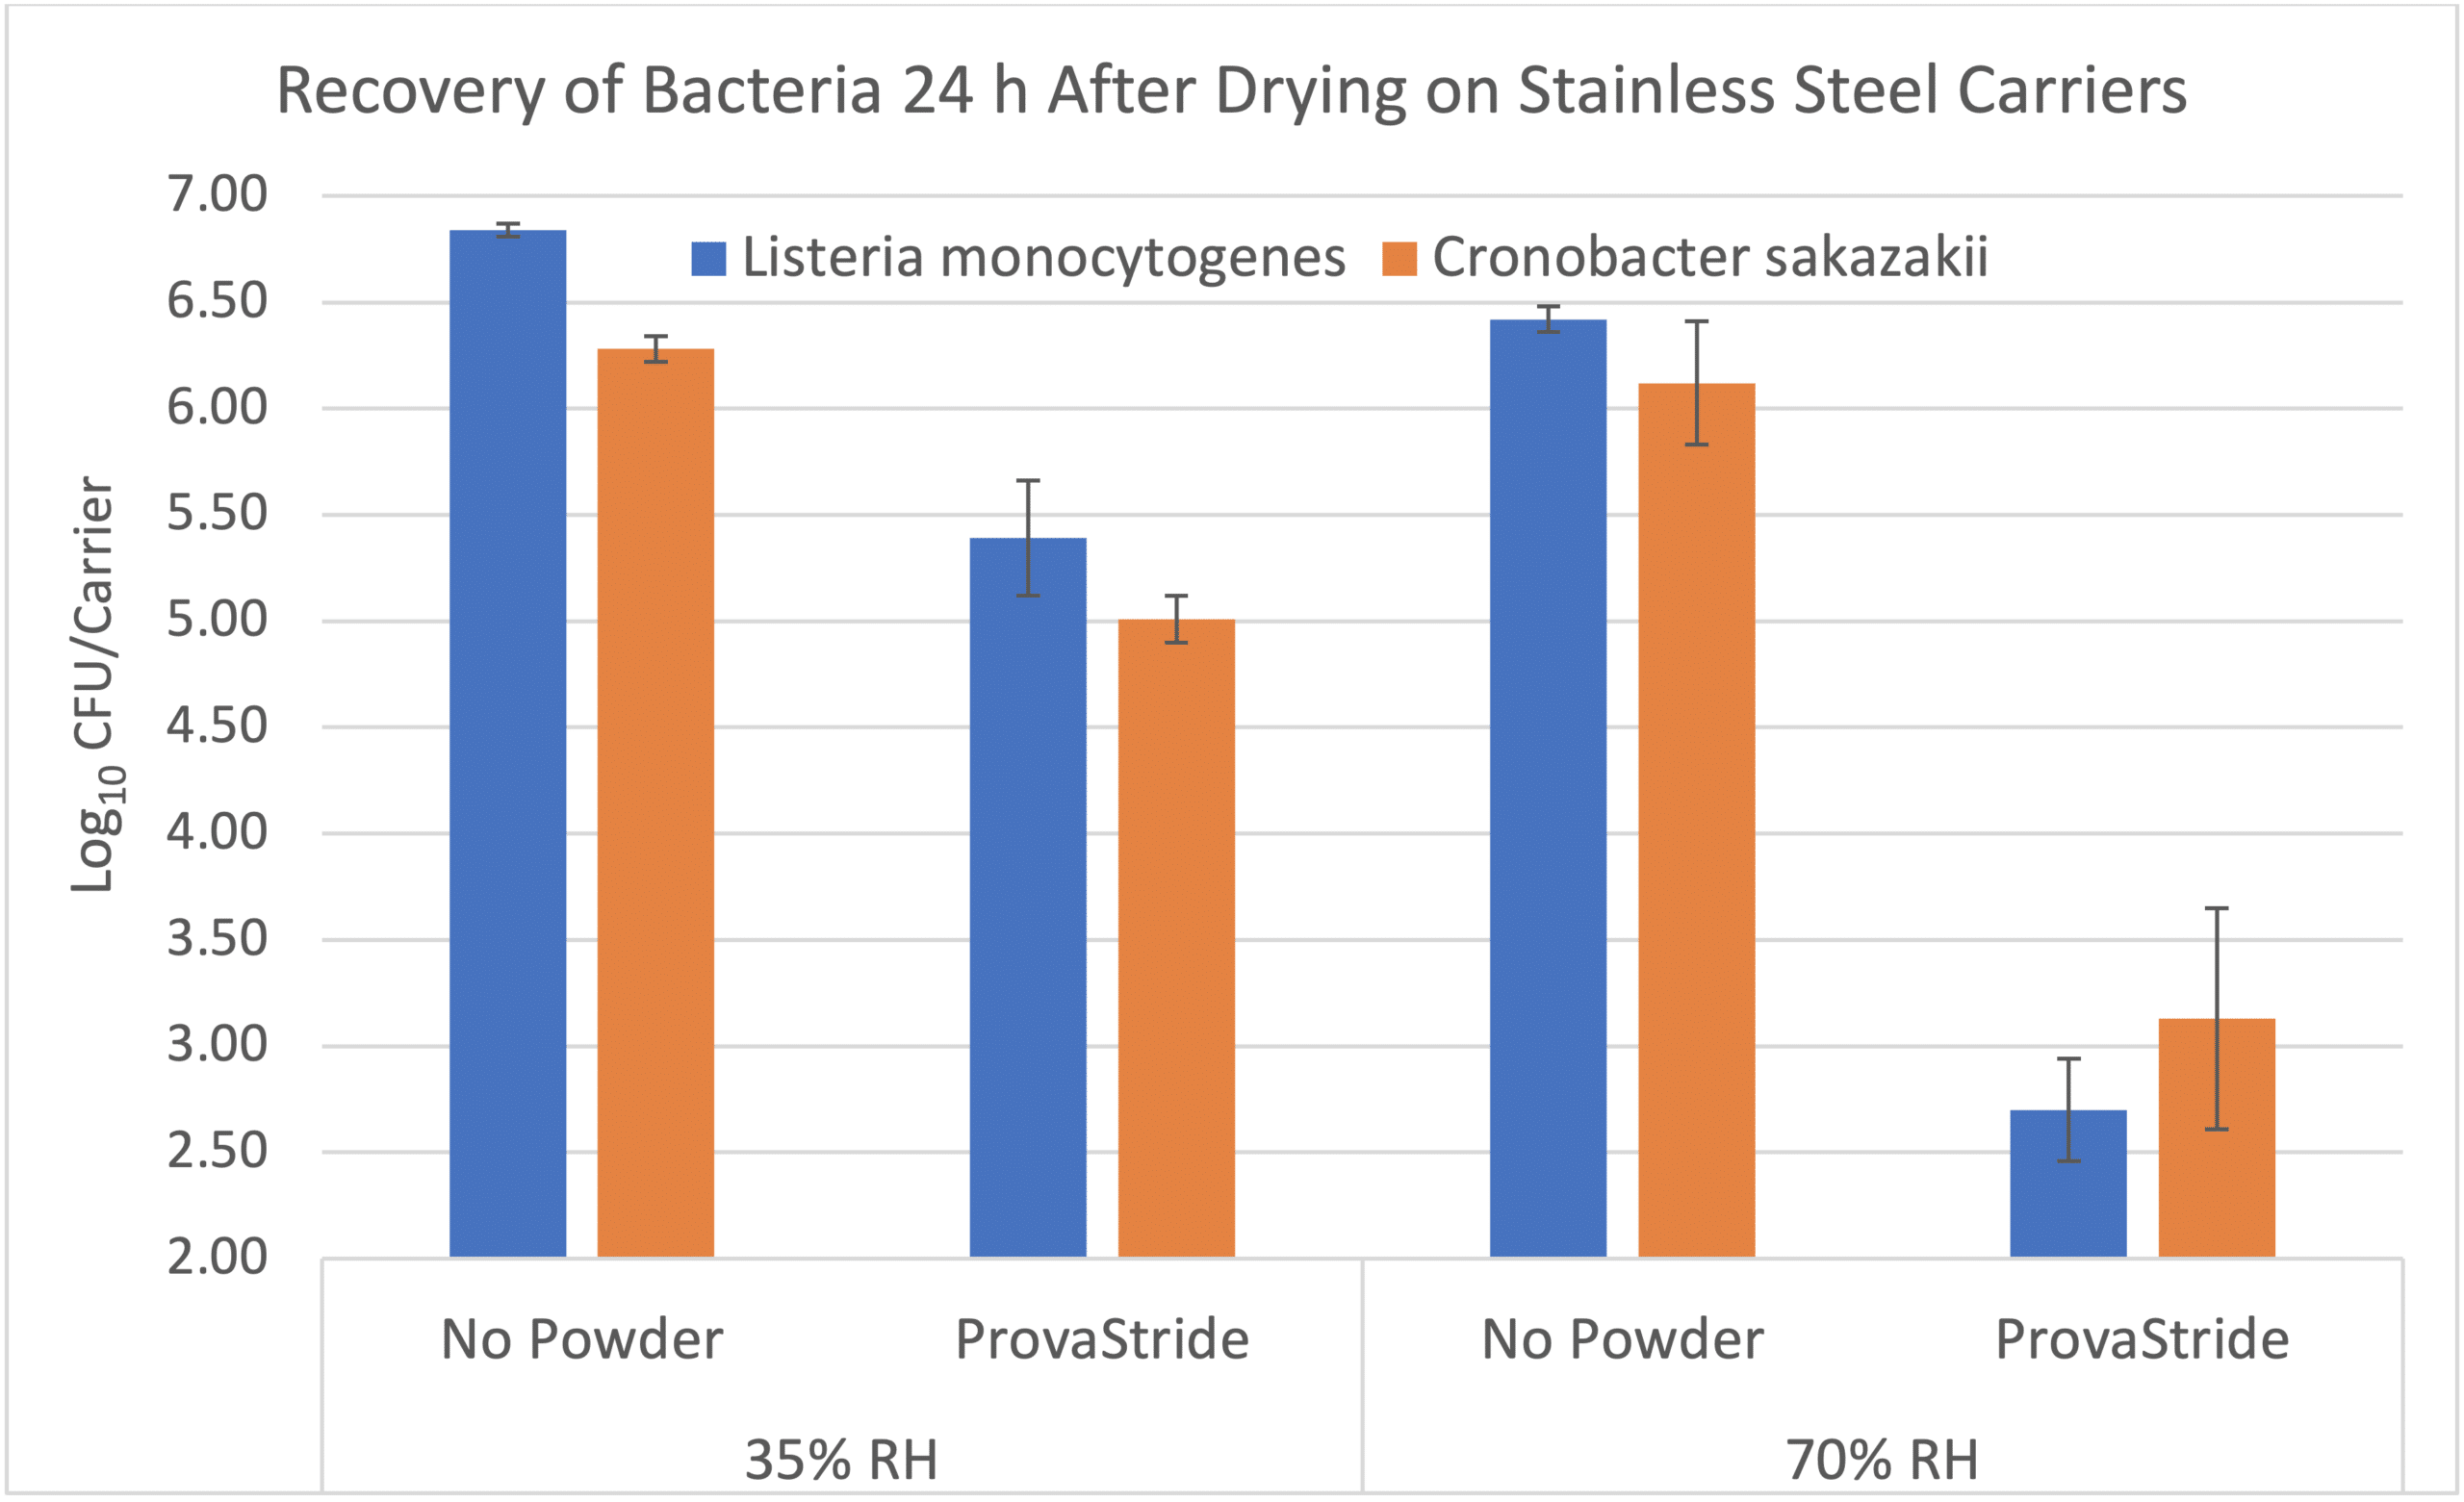 Graph showing recovery of listeria monocytogenes and cronobacter sakazakii